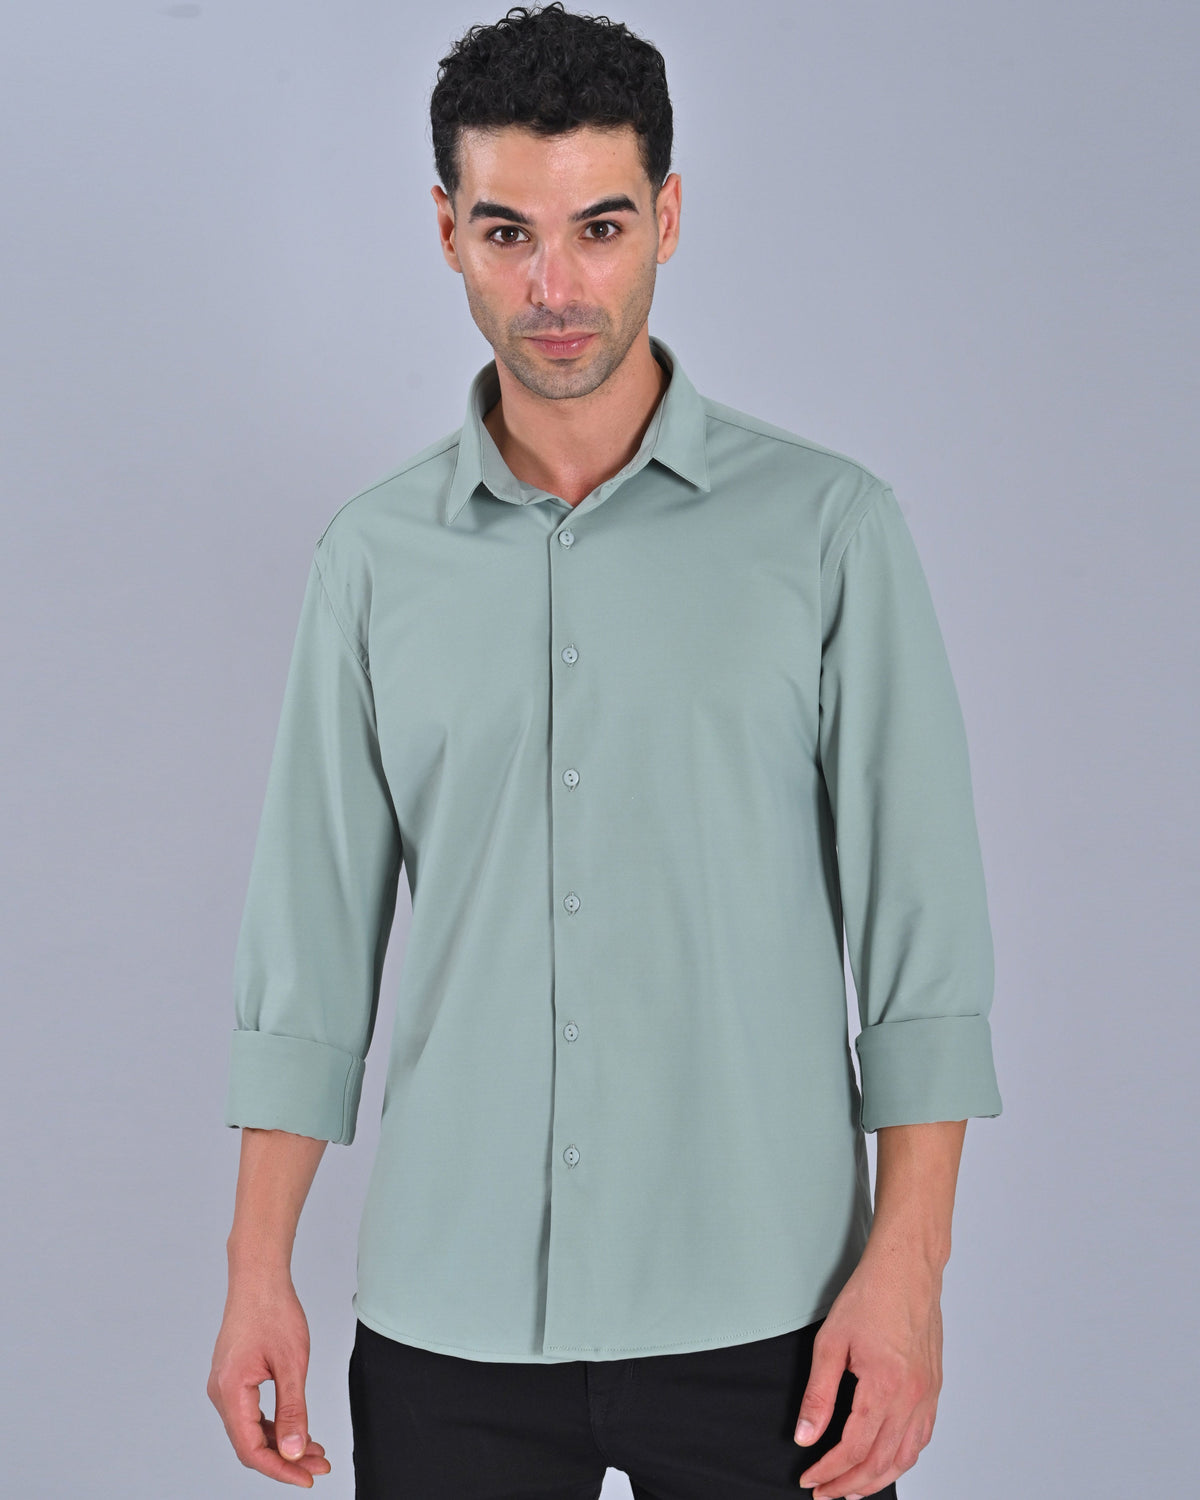 Men's Solid Classic Light Green Colour Shirt